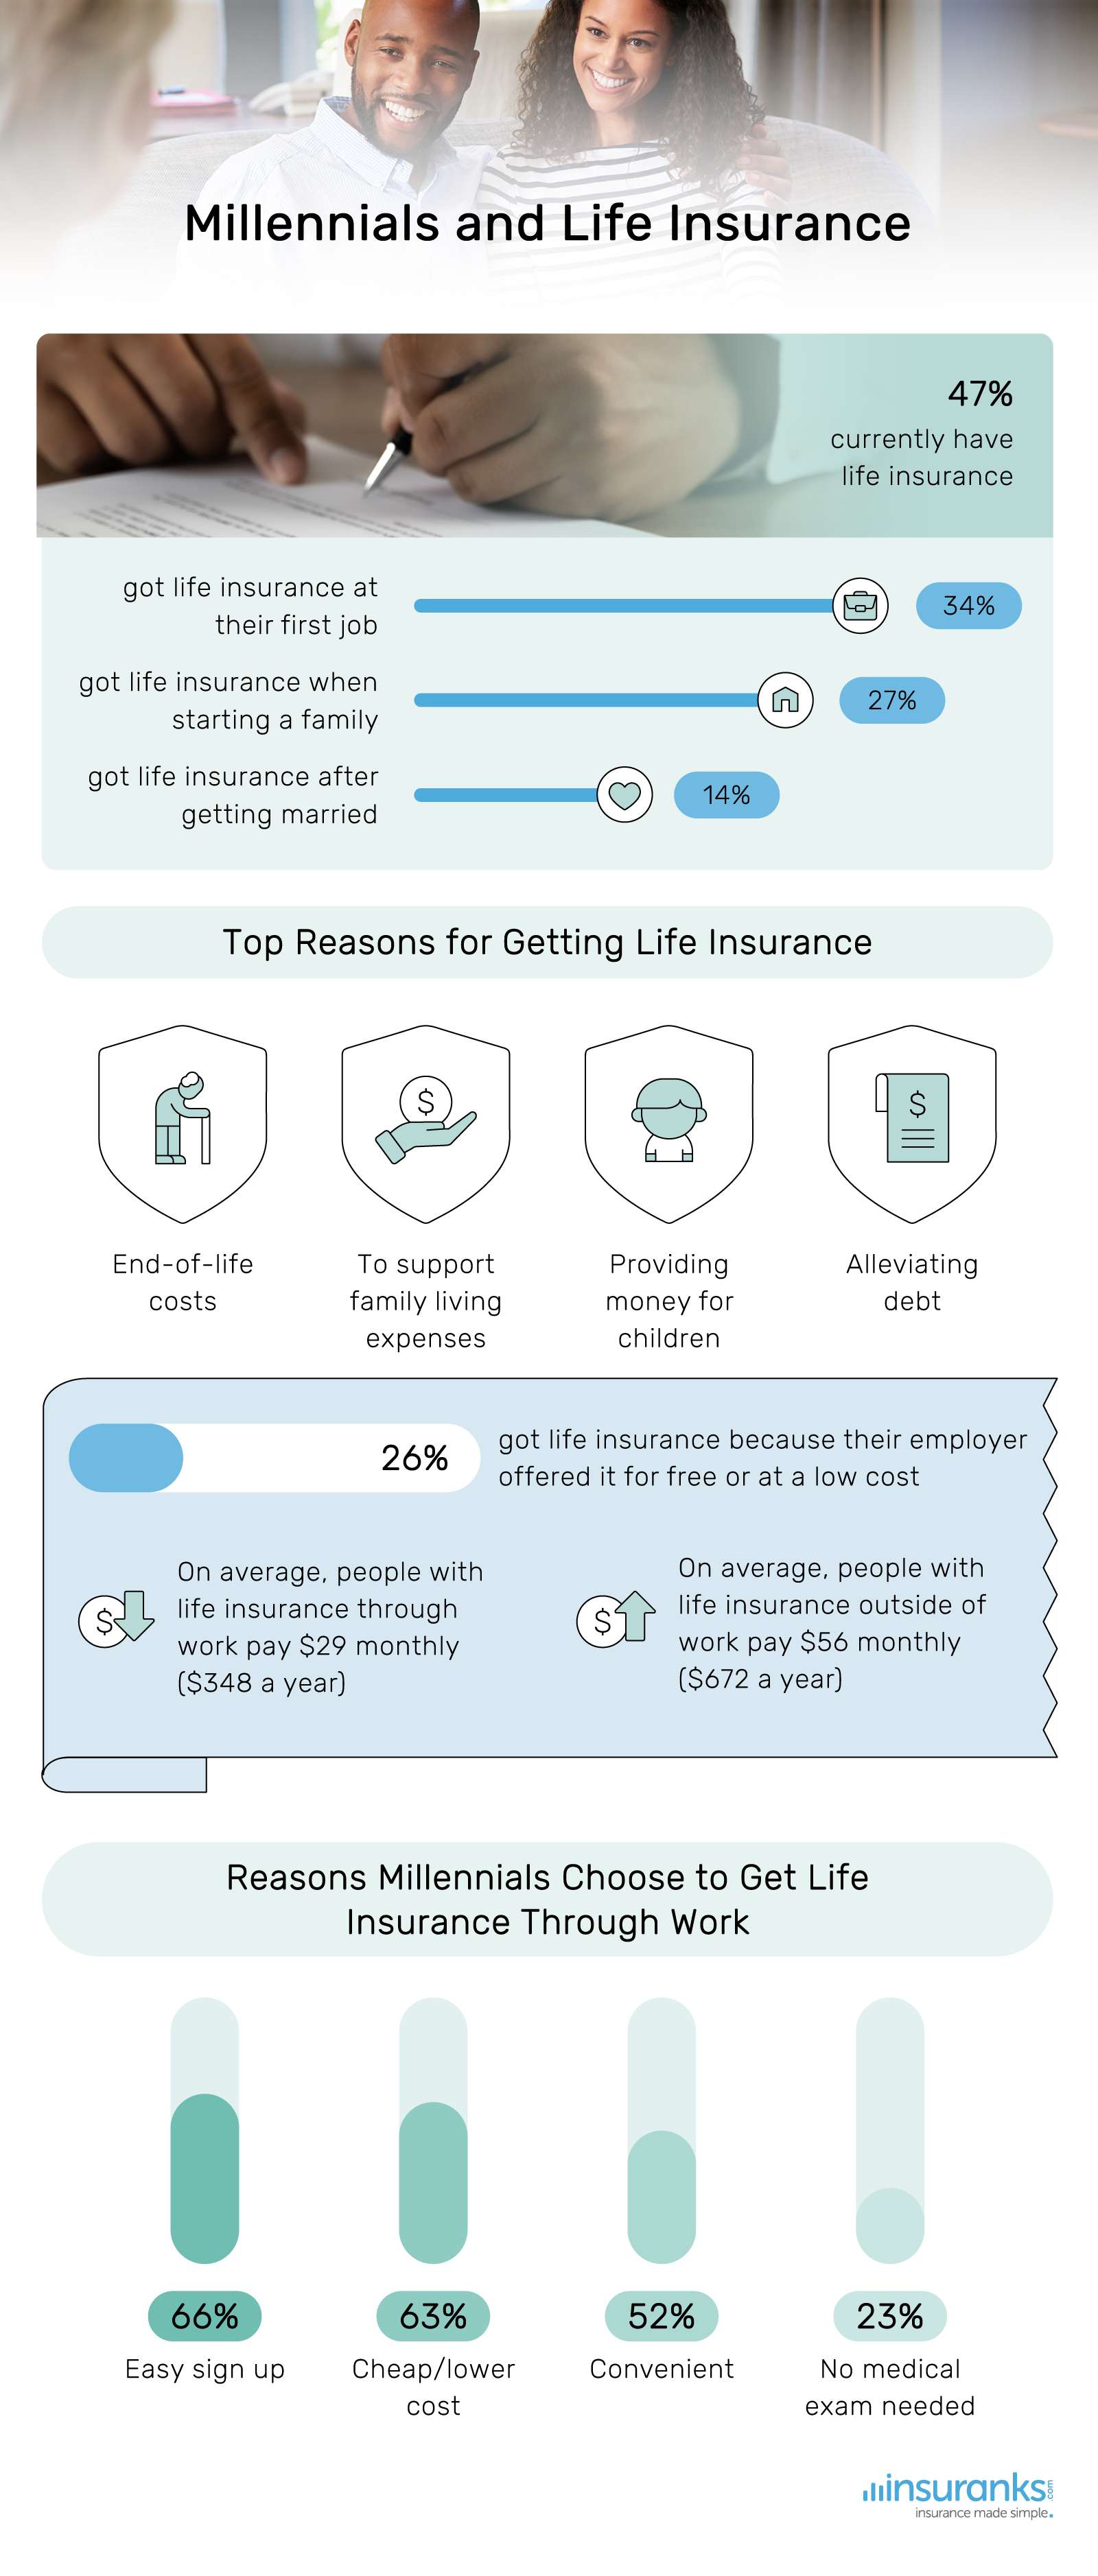 Top 4 Reasons Millennials Get Life Insurance - insuranks.com report